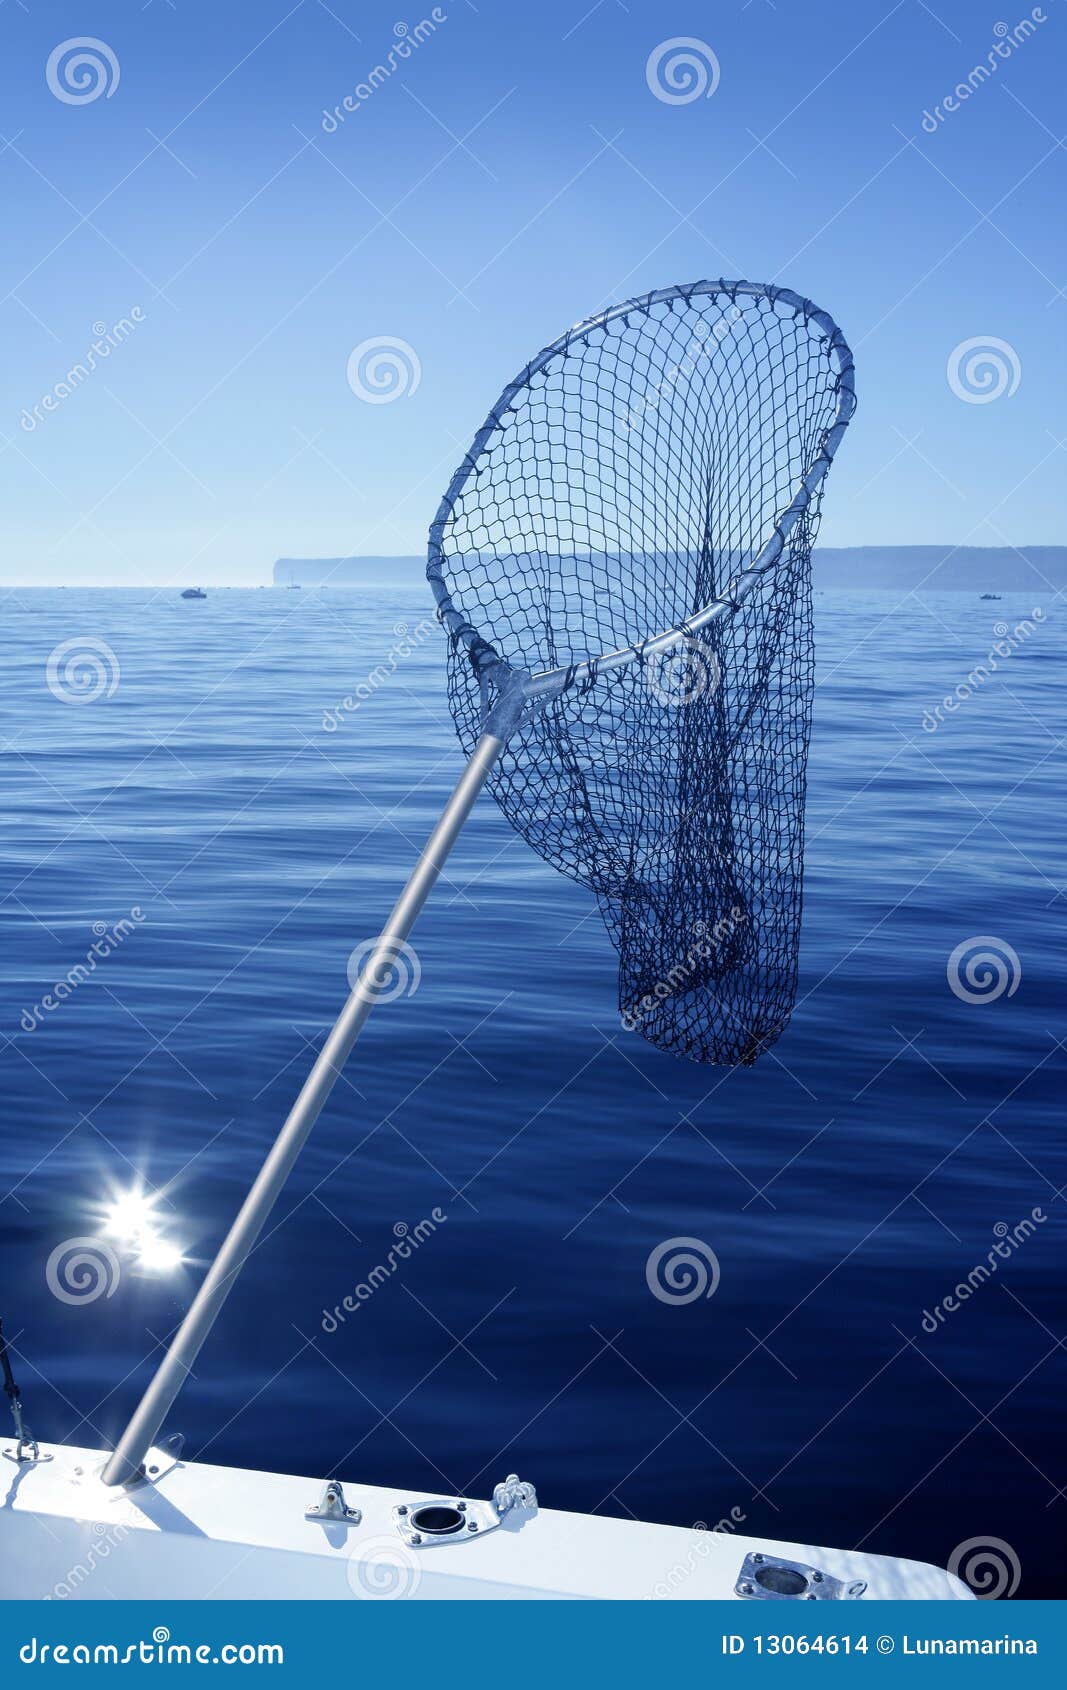 Fishing Scoop Net on Boat in Blue Sea Stock Photo - Image of empty, boat:  13064614